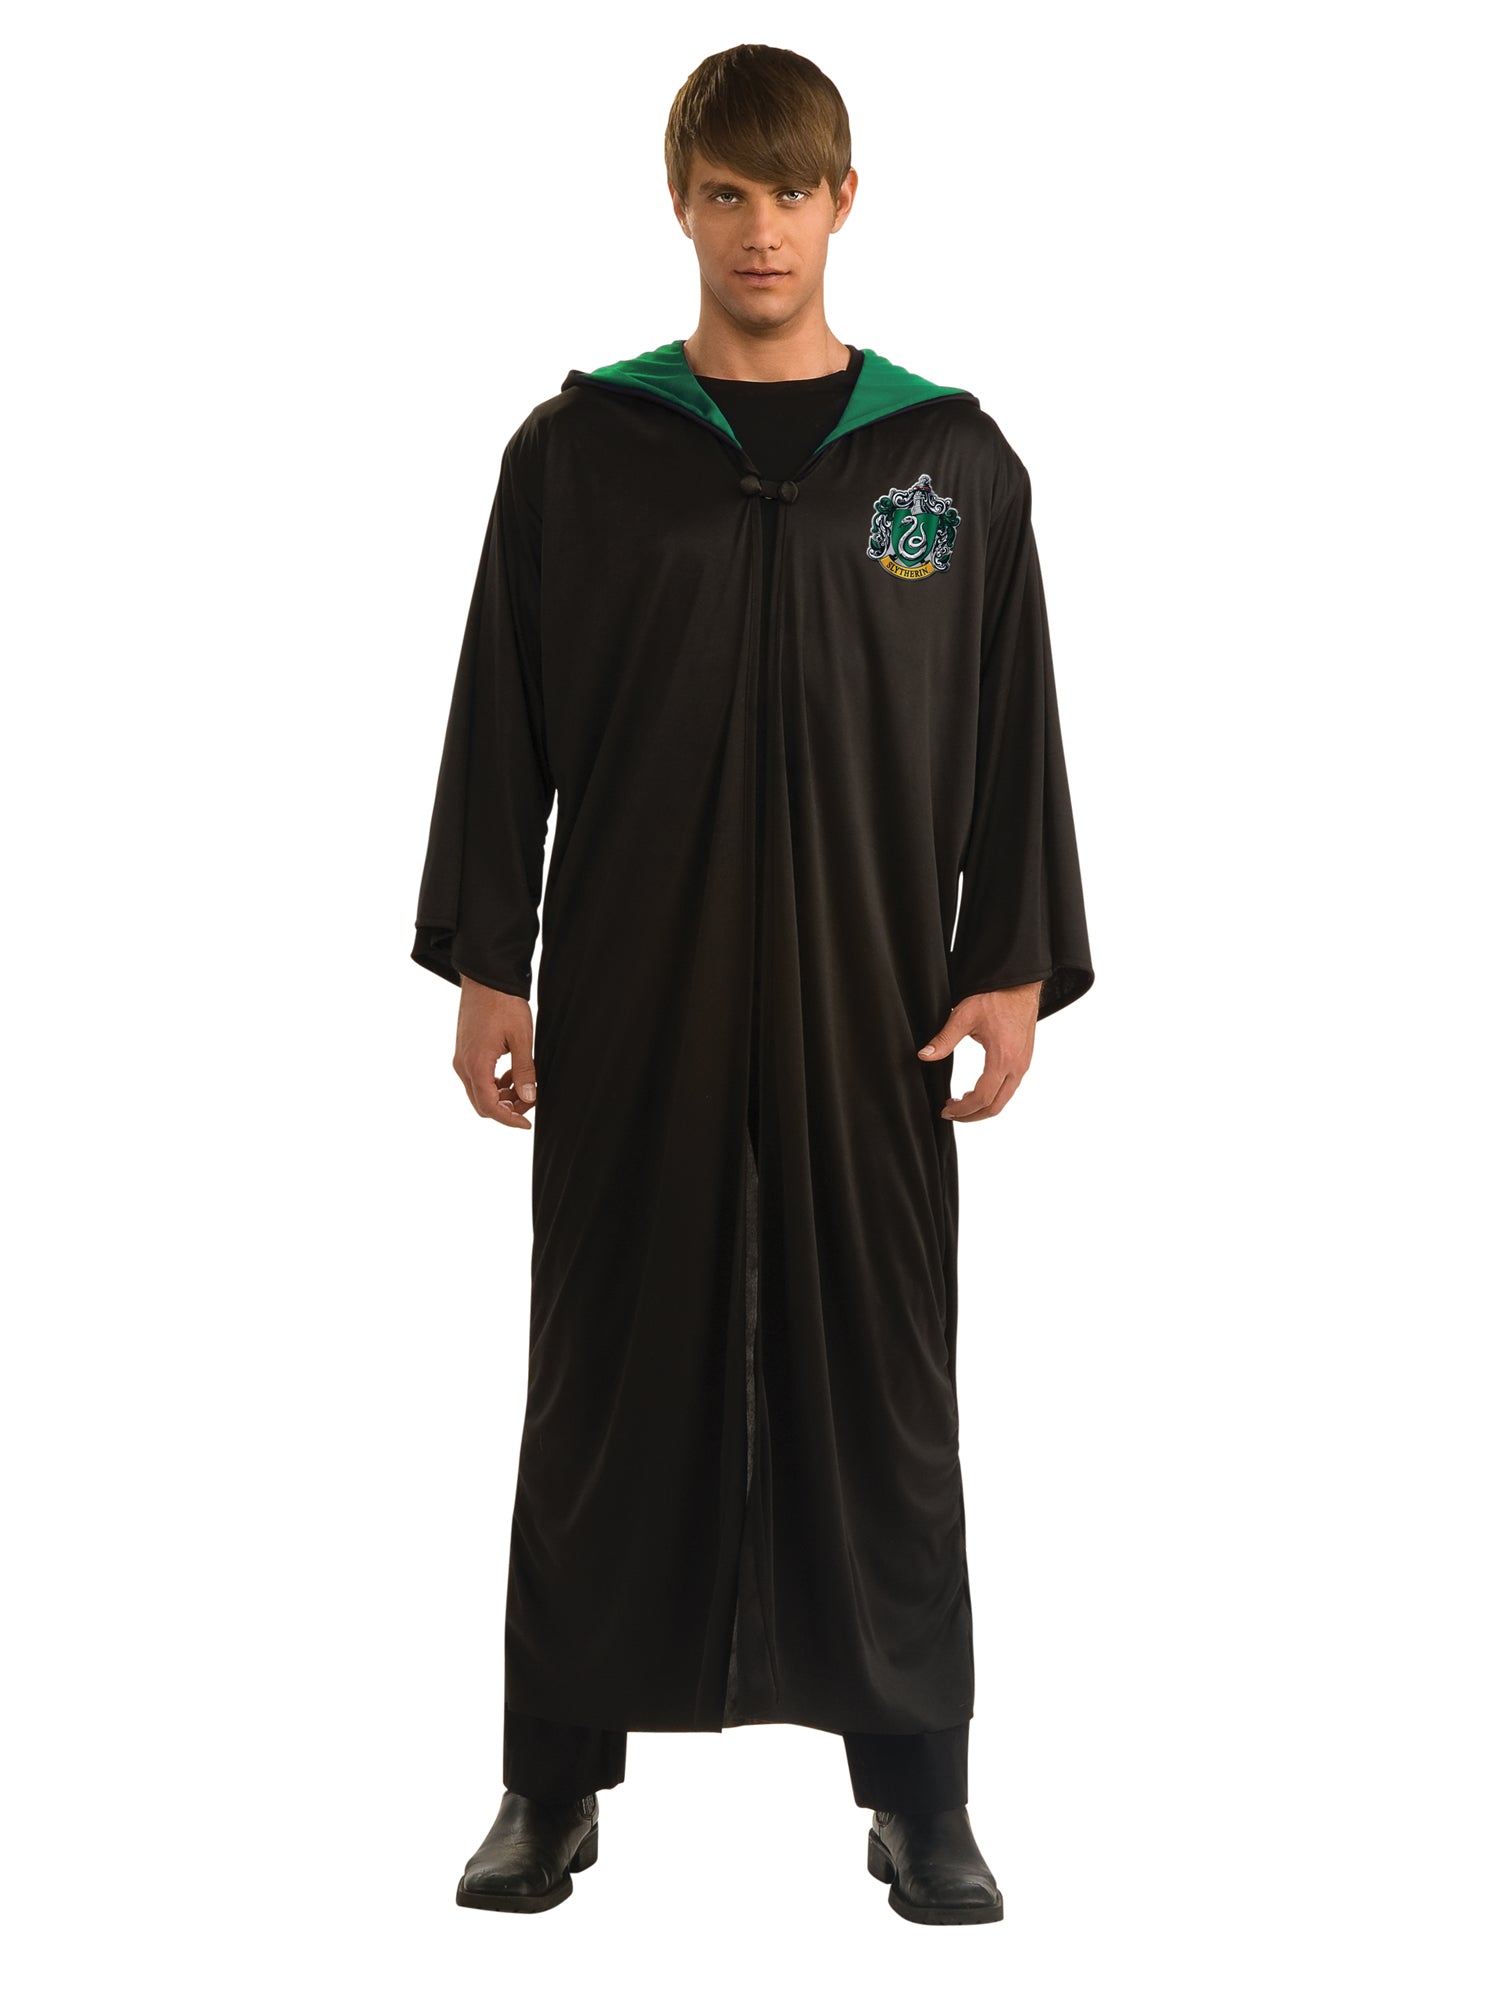 Slytherin Robe Costume